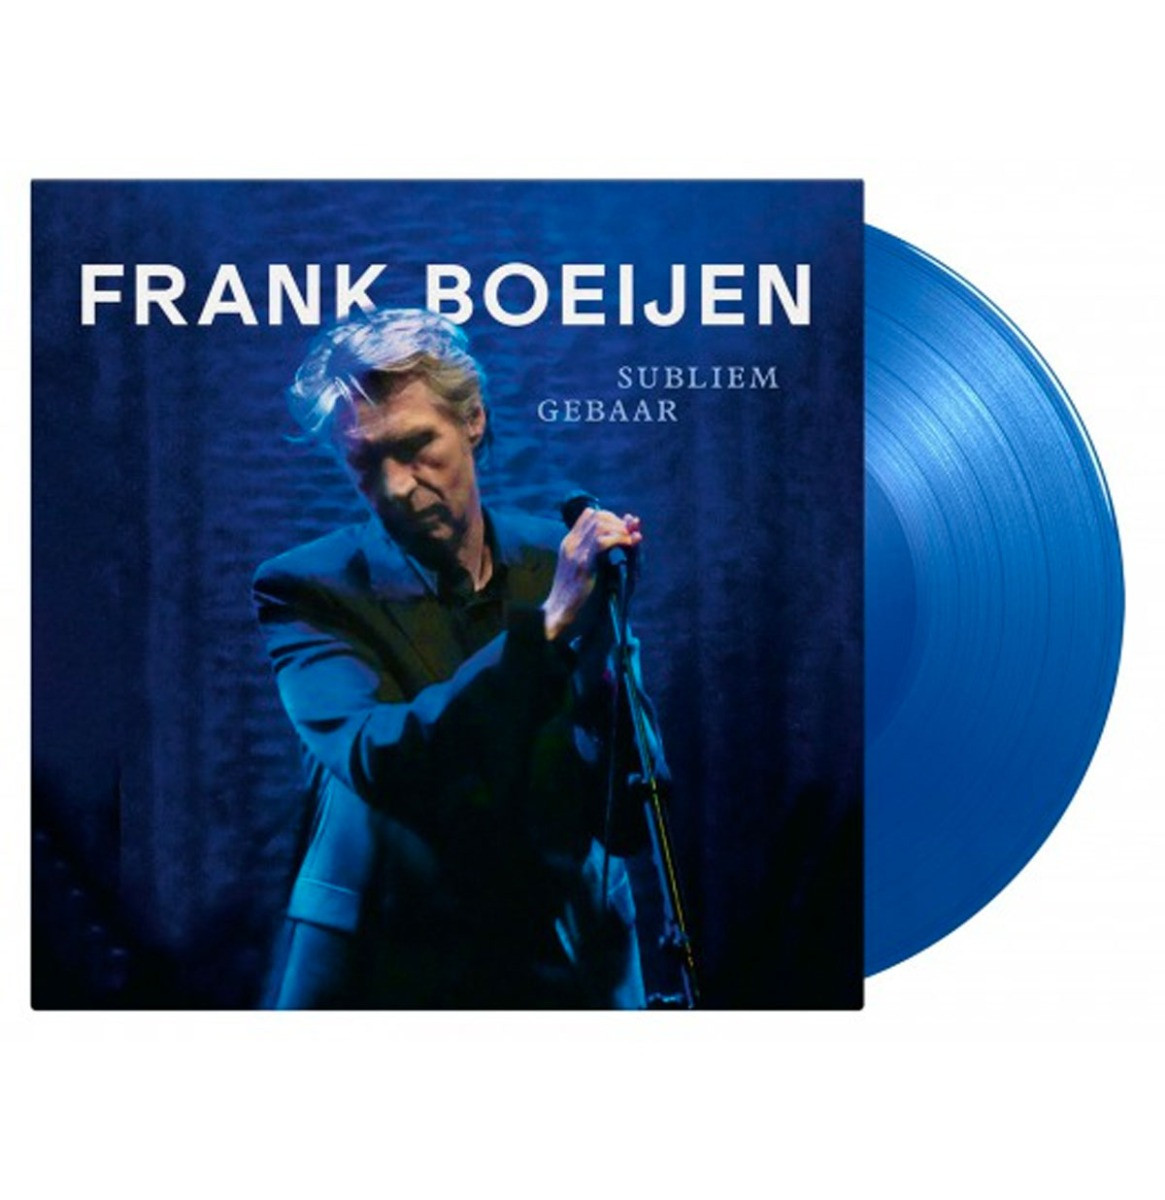 Frank Boeijen - Subliem Gebaar (Gekleurd Vinyl) LP